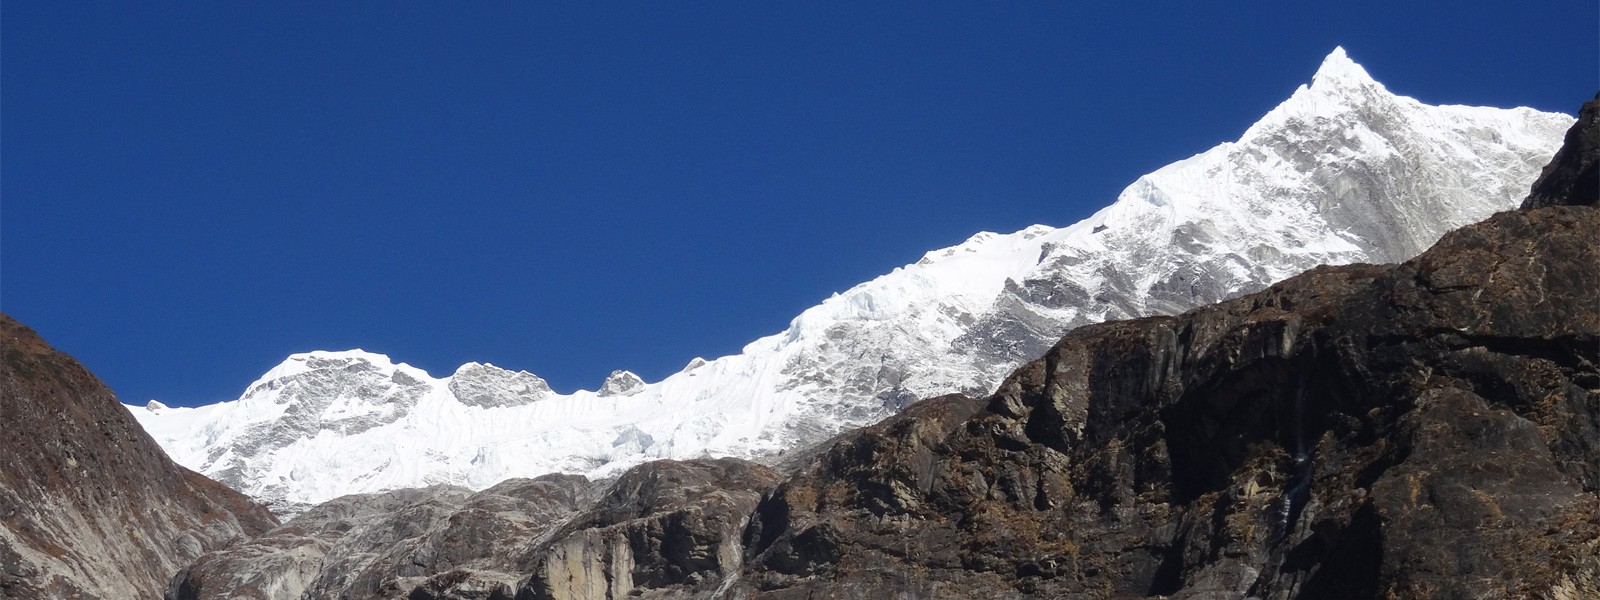 Mt. Langtang Lirung Expedition - Langtang Region, Nepal